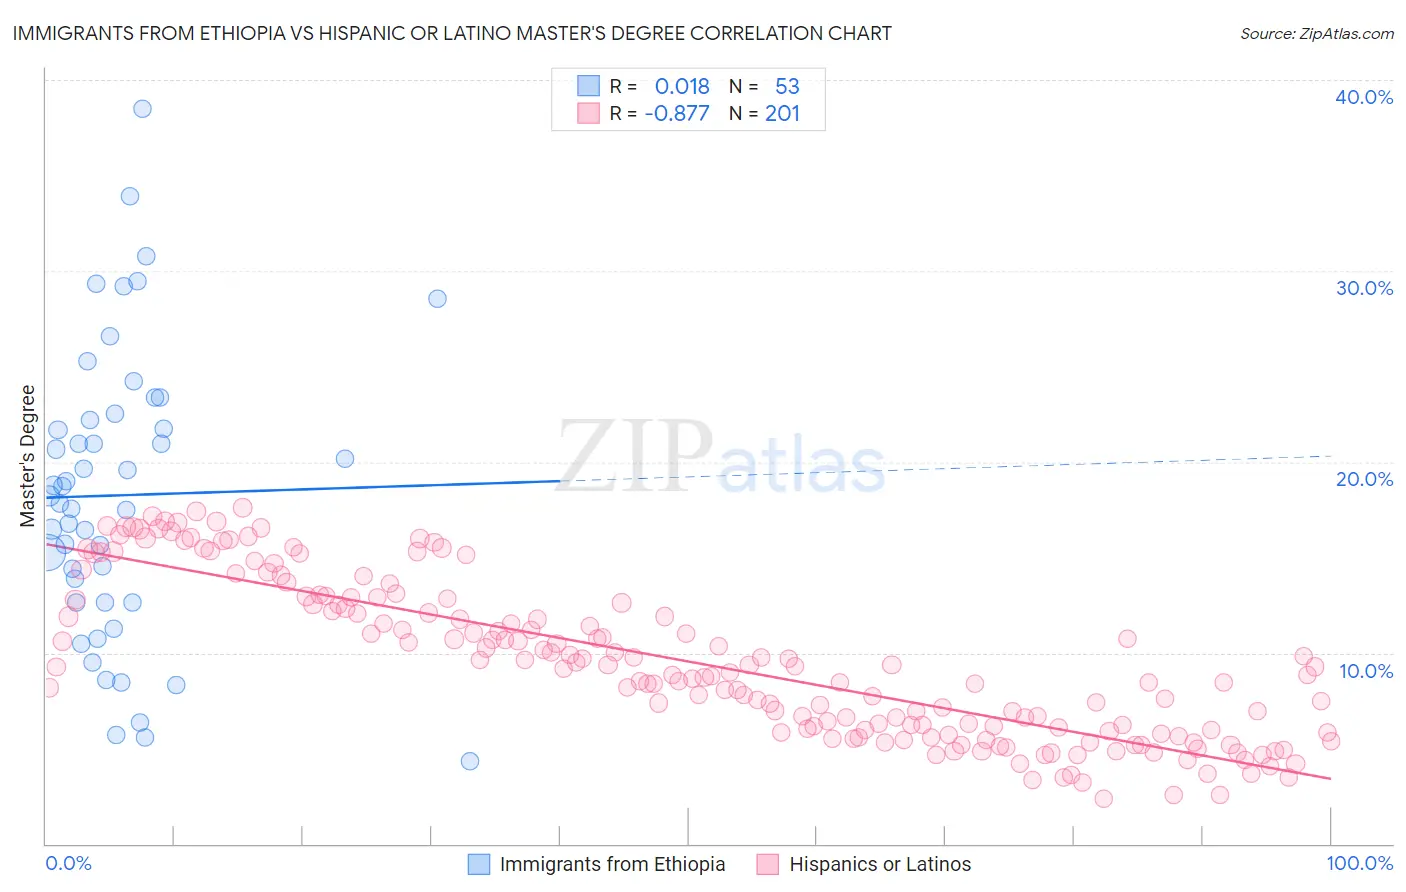 Immigrants from Ethiopia vs Hispanic or Latino Master's Degree